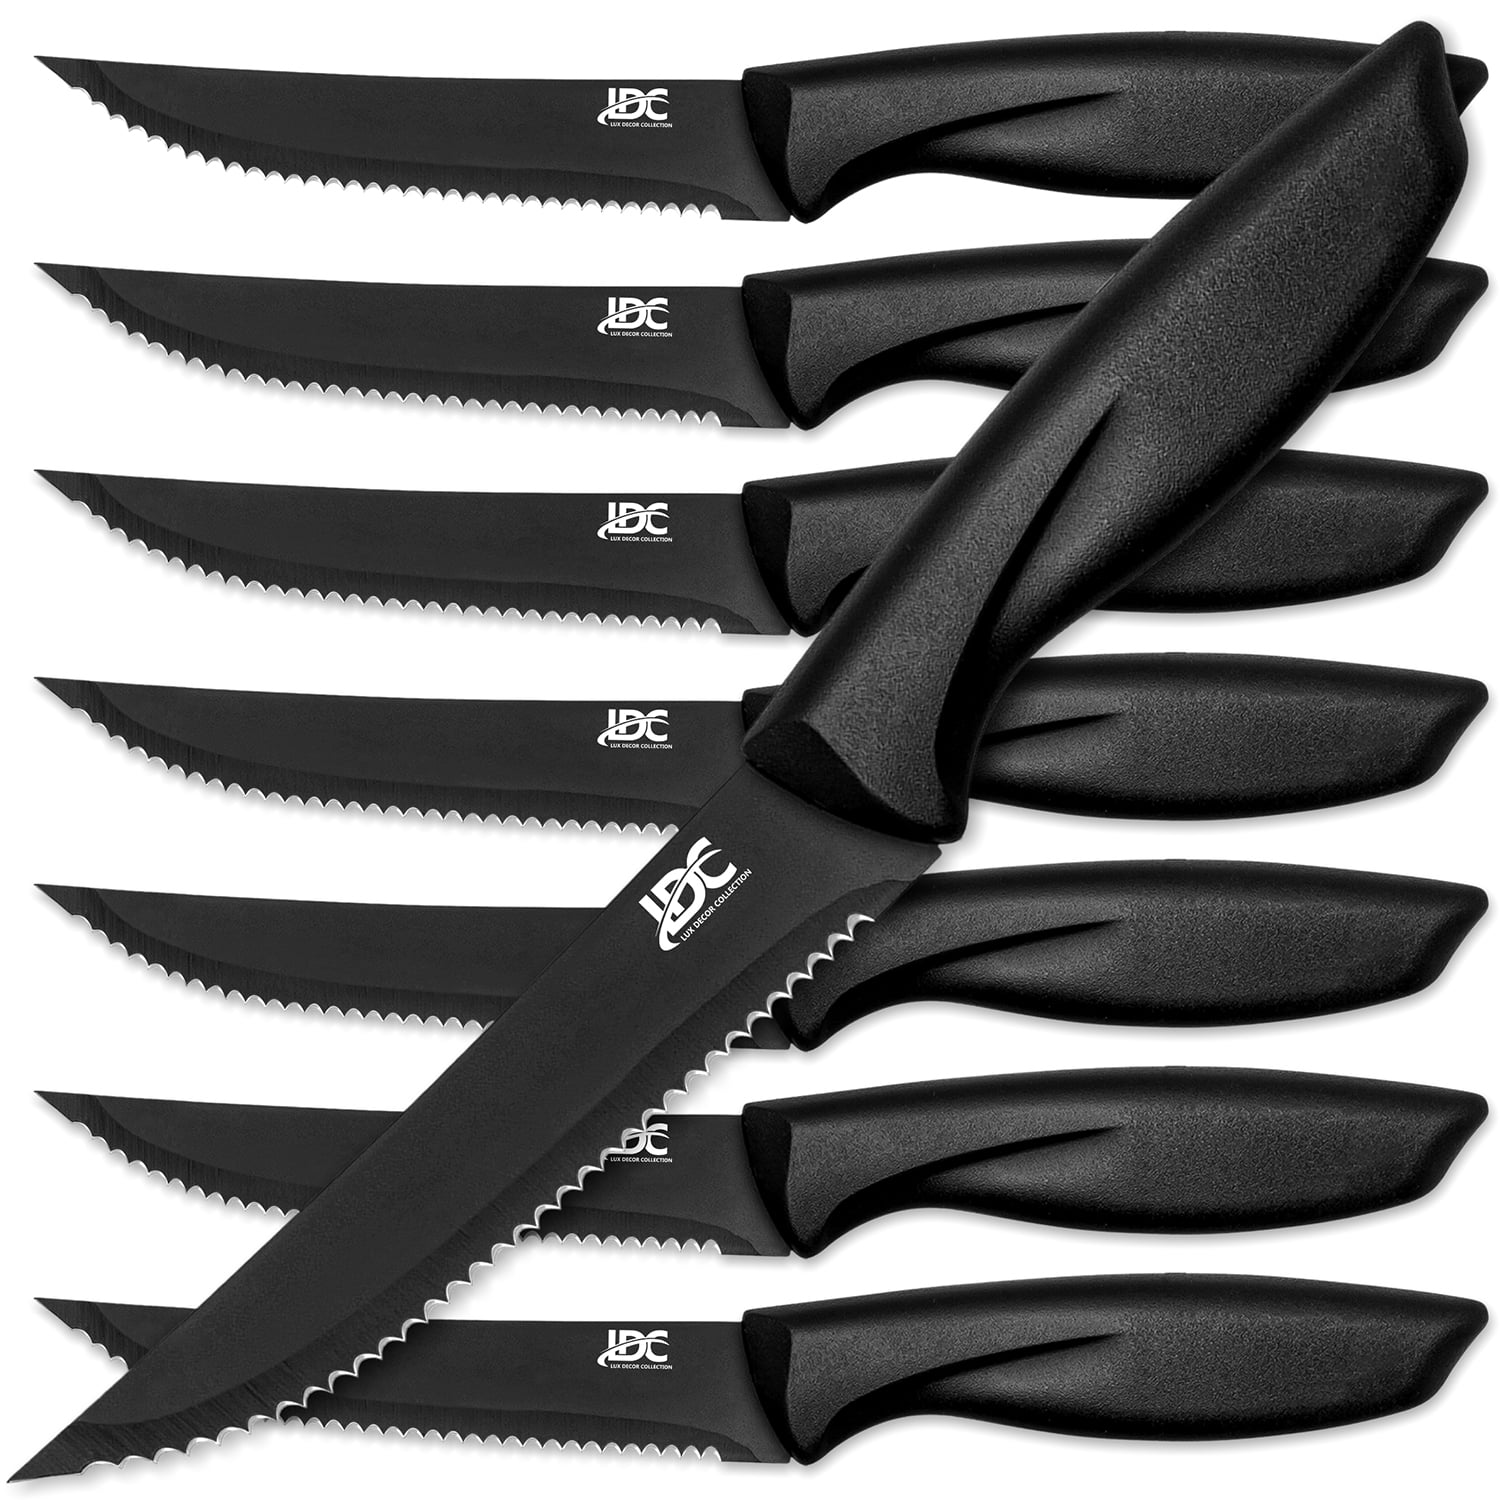 OAKSWARE Steak Knives Set of 8, Non Serrated Steak Knives with